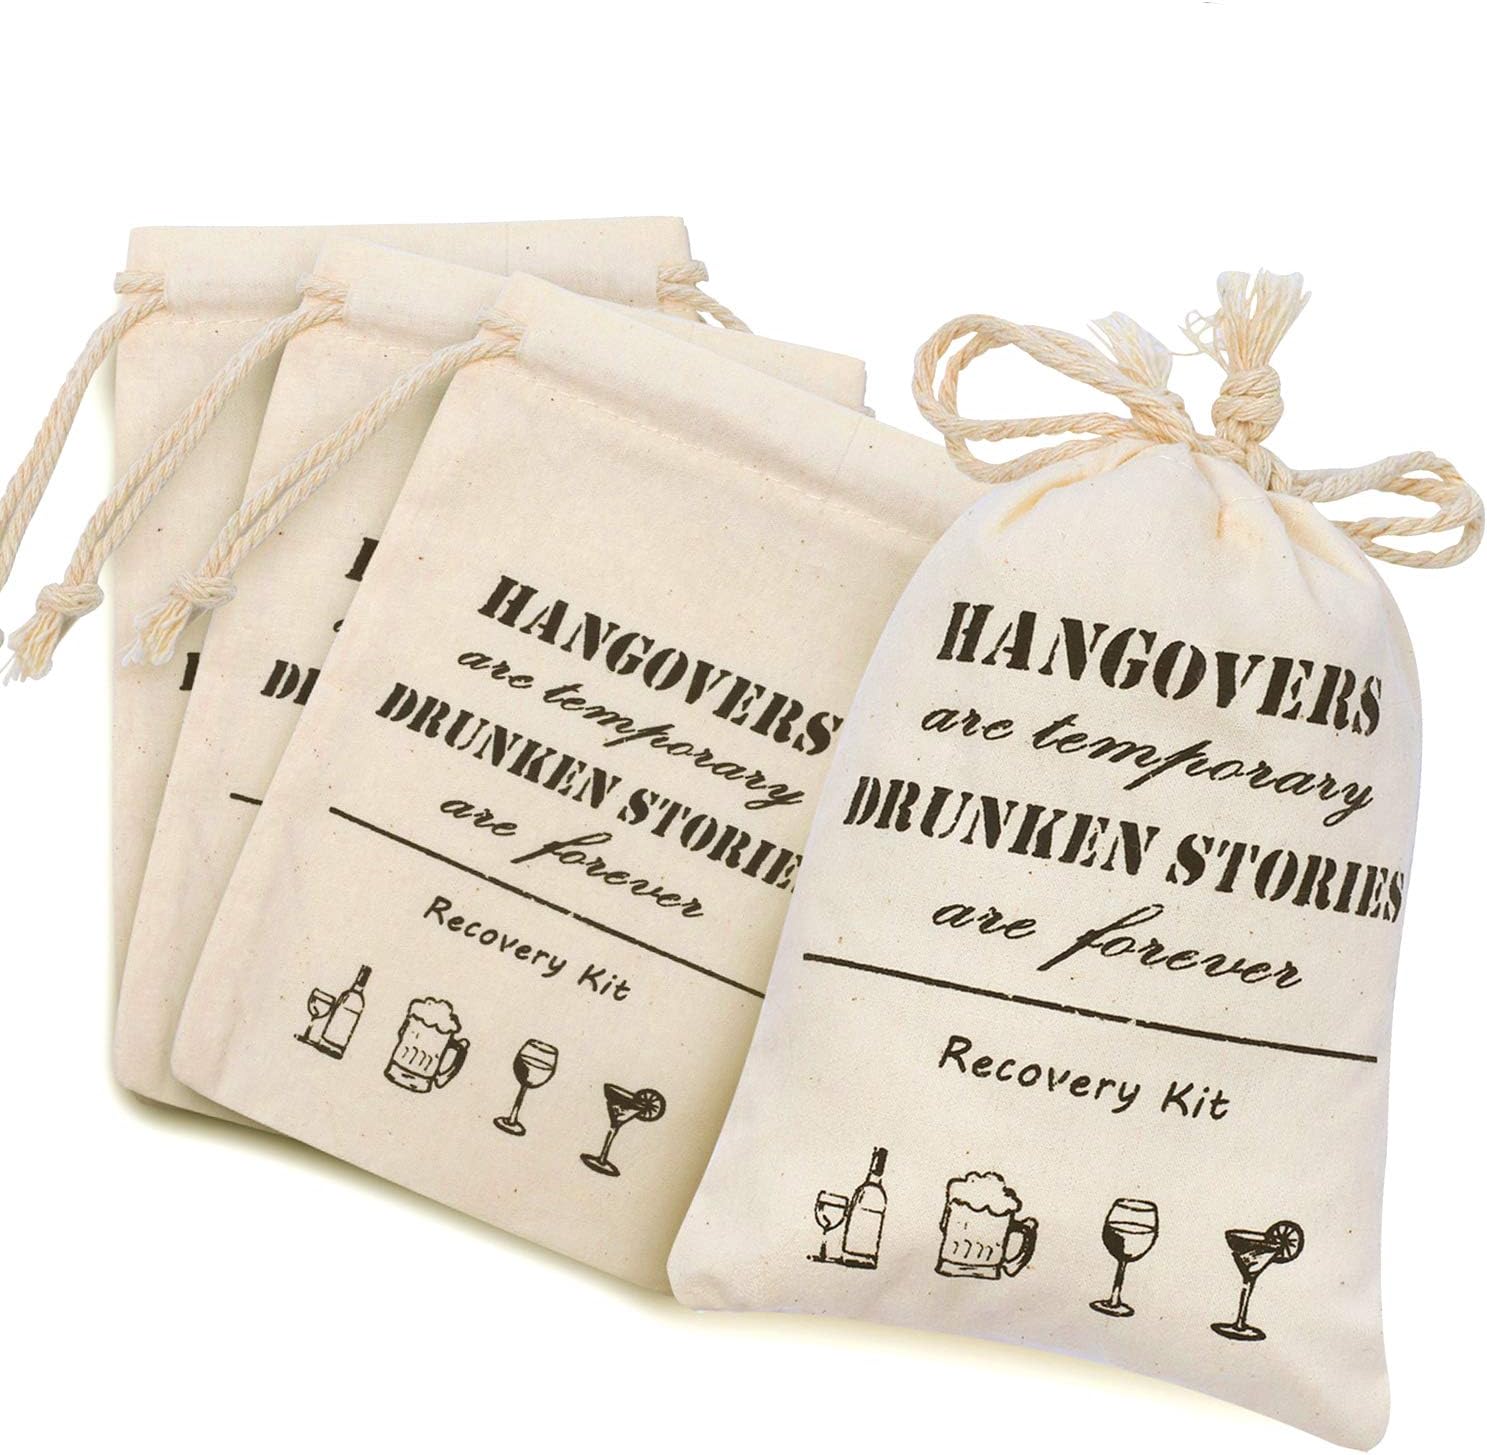 Amenity Bachelorette Party Bags Cotton Drawstring " Hangover Bags Hangover Kit 